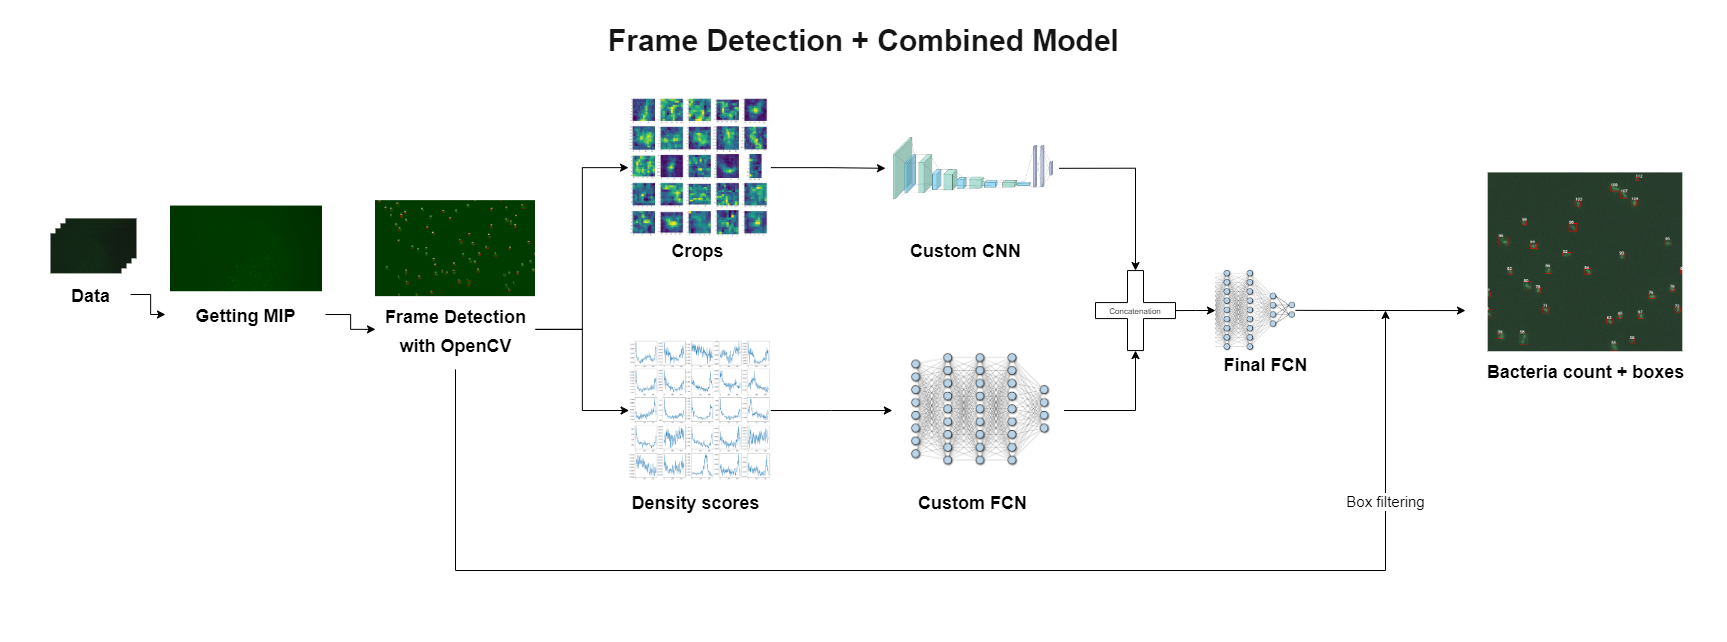 Frame Detection + Combined Model